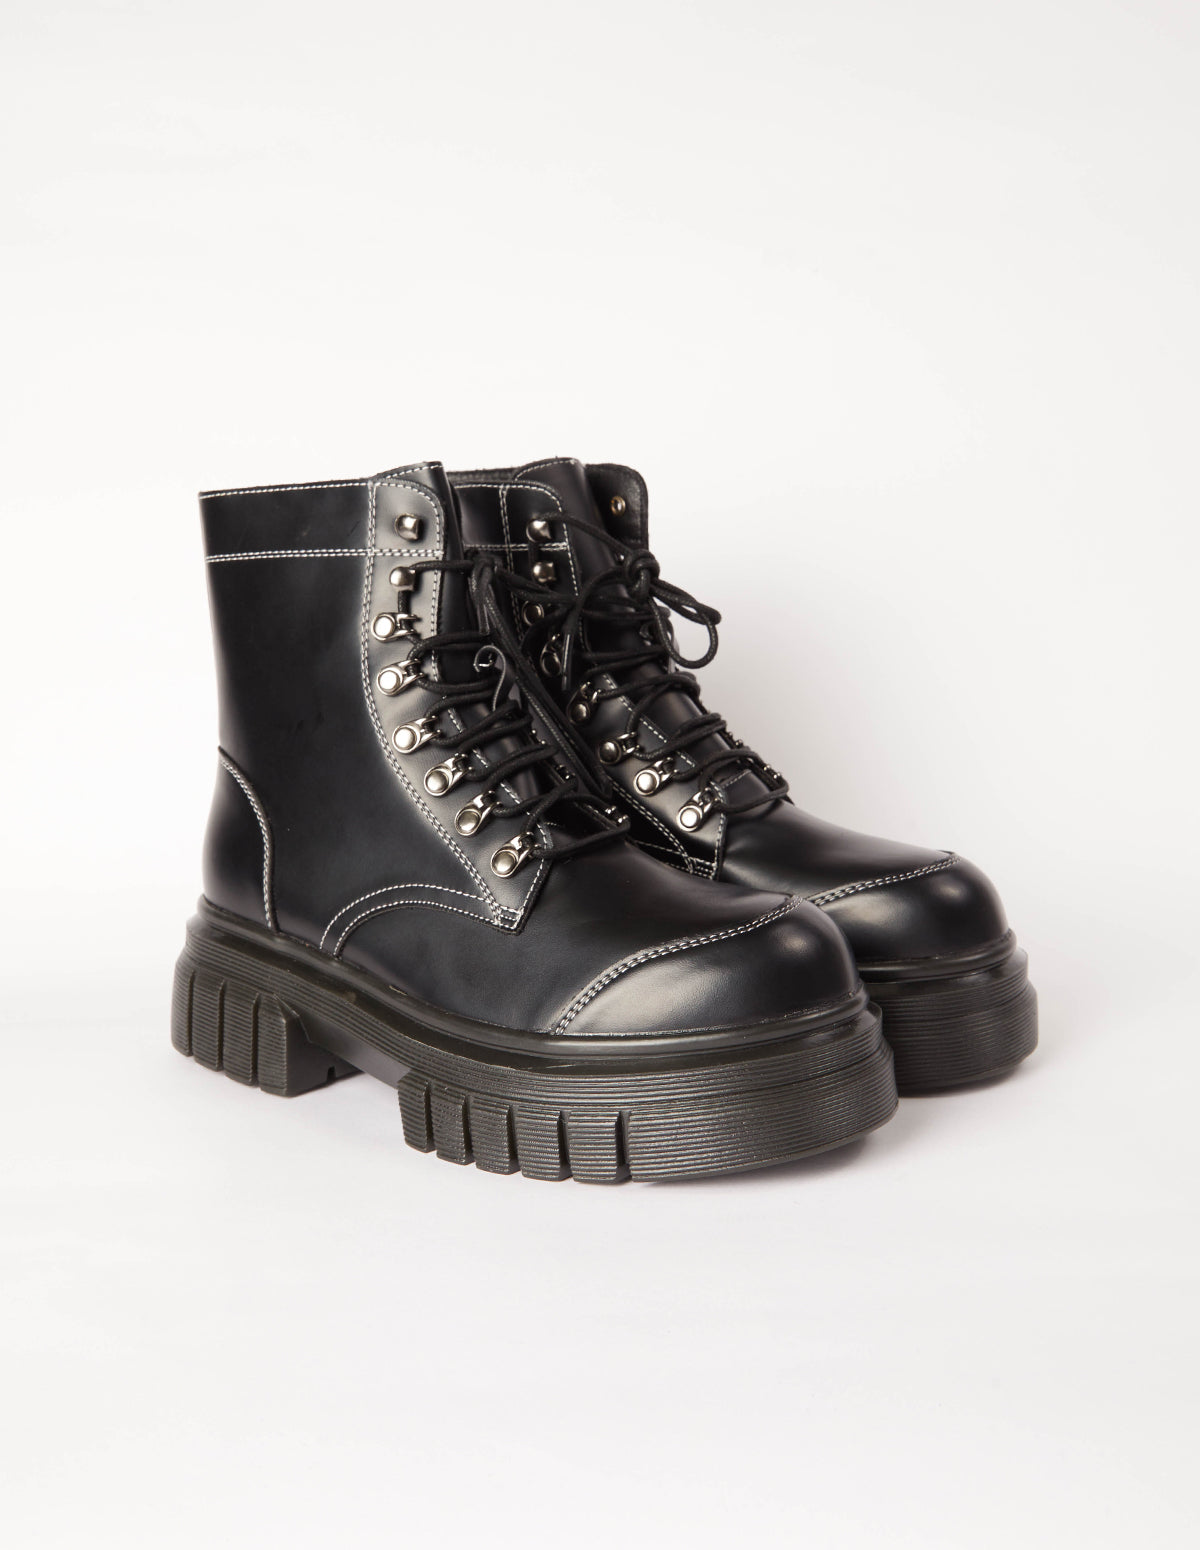 PU Lace Up Combat Style Boots - Jun